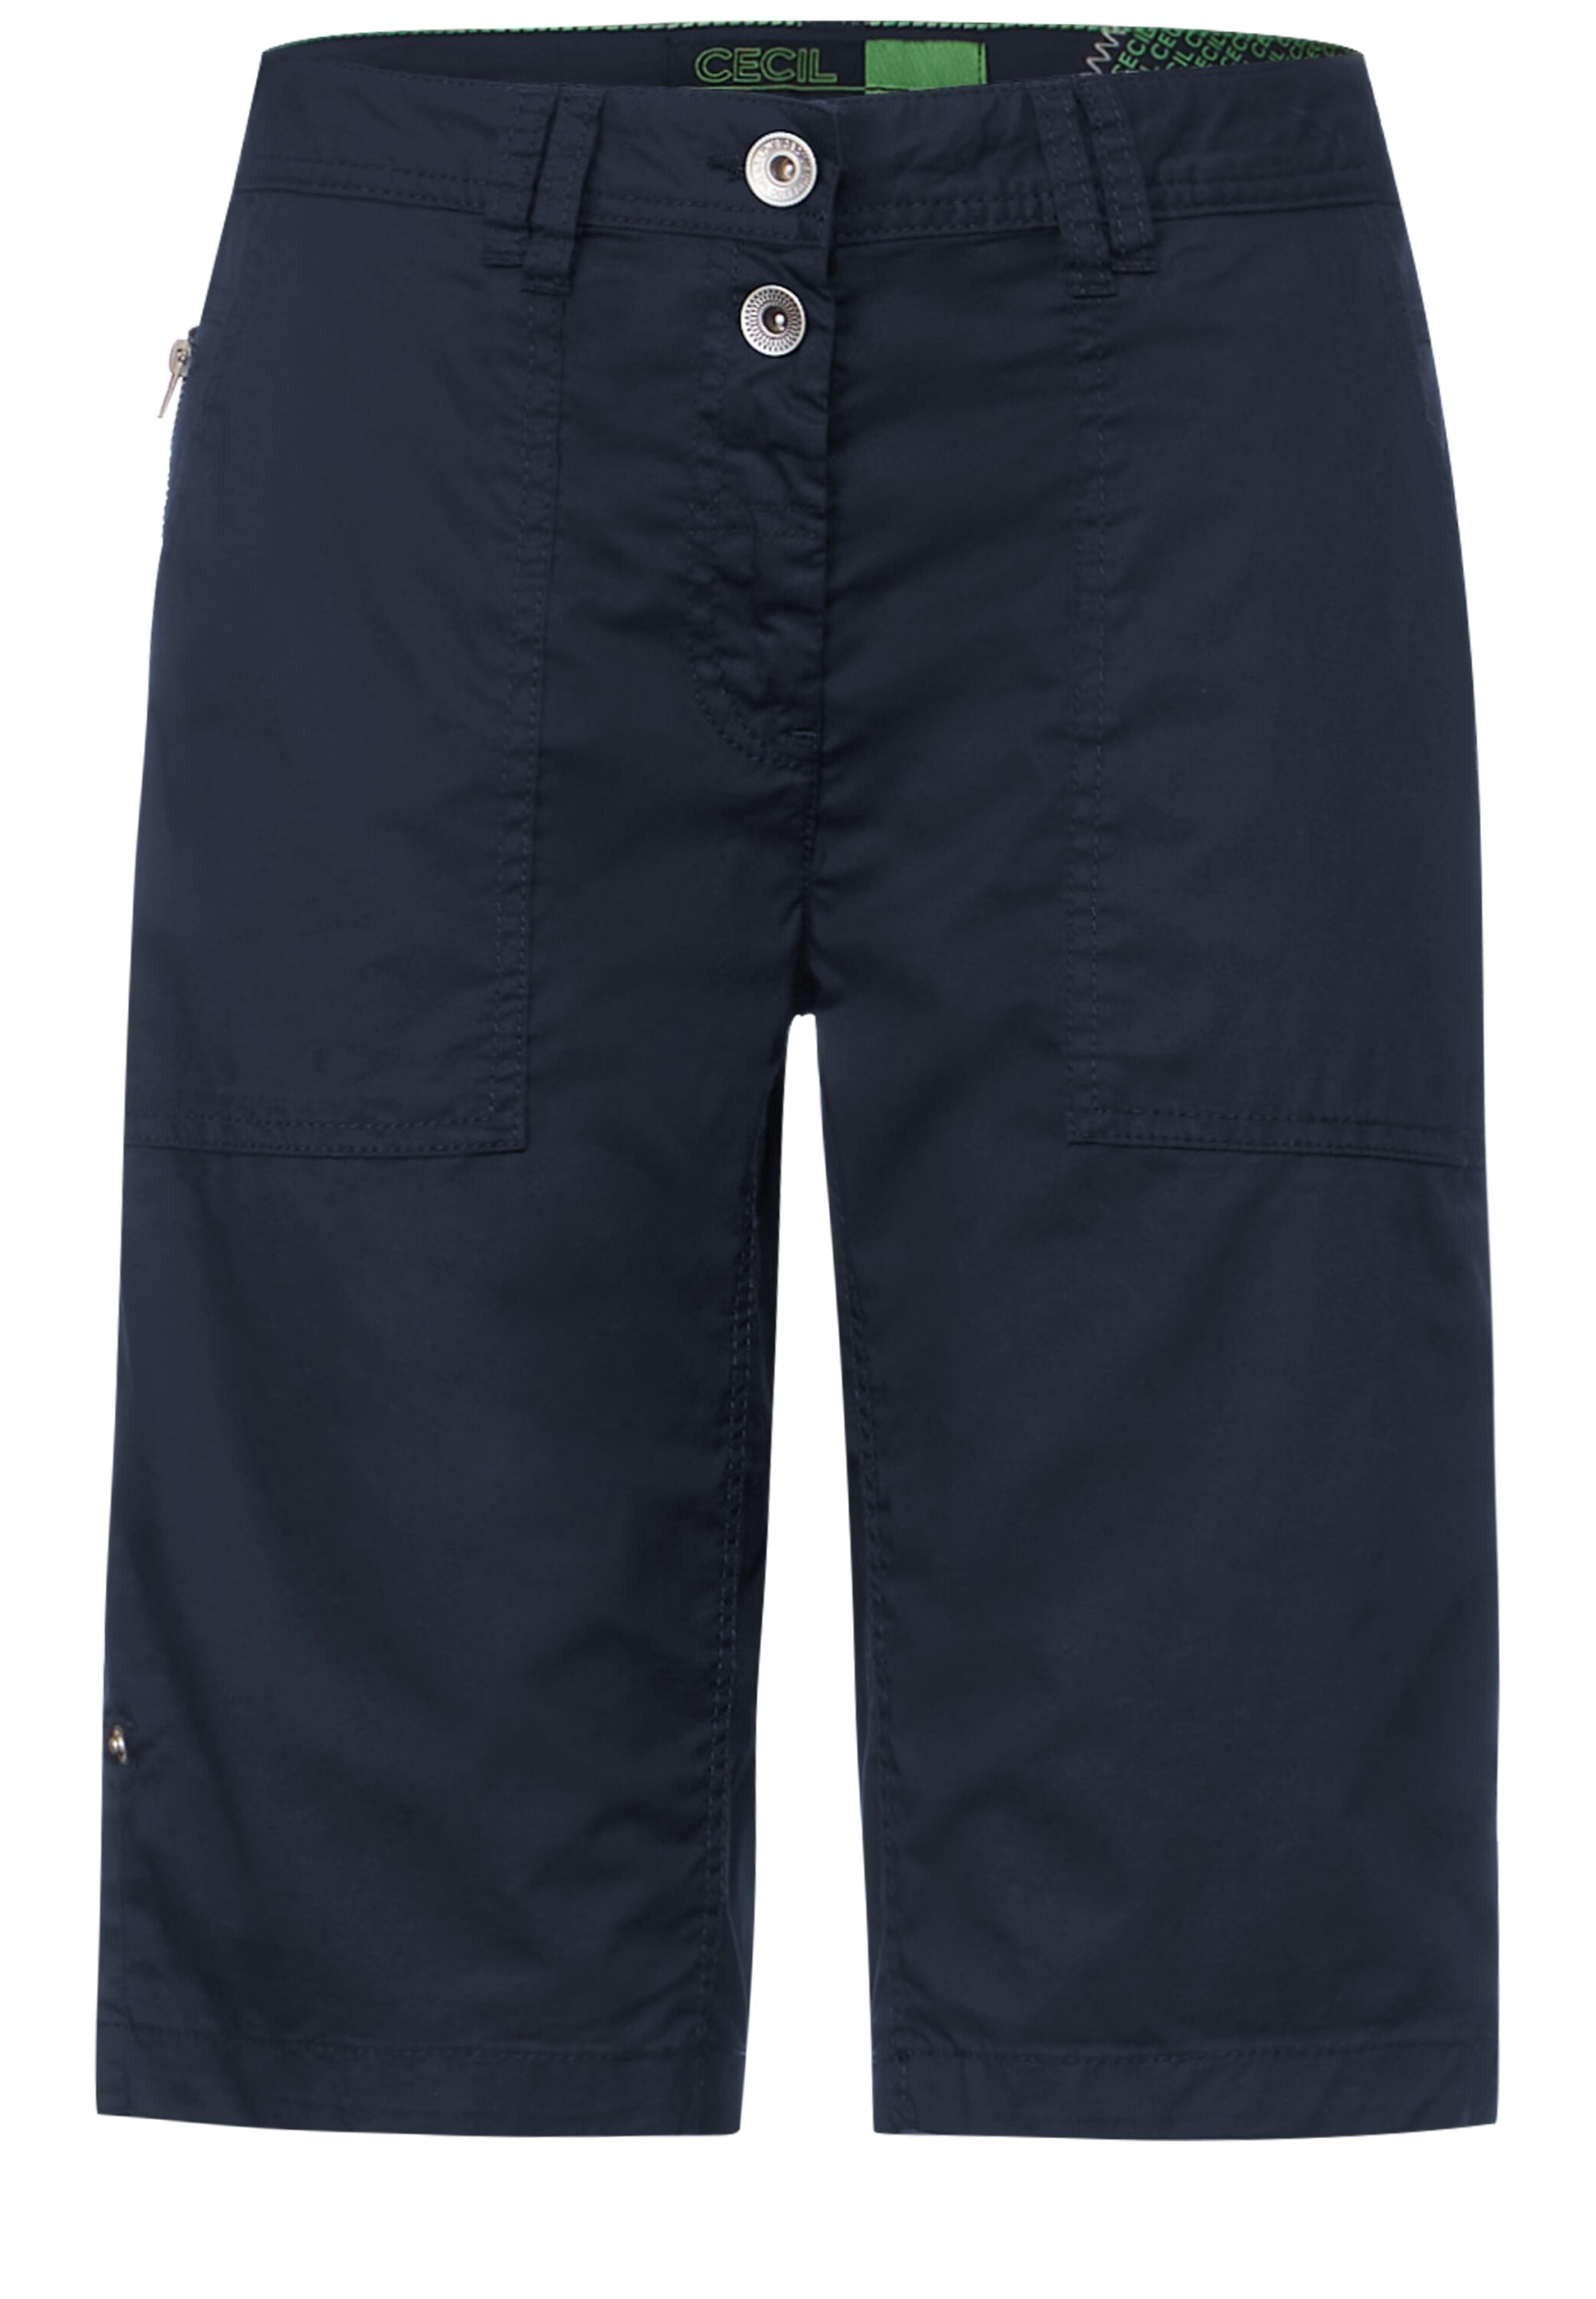 Style NOS New York Shorts | 33 | deep | blue B376478-10128-33